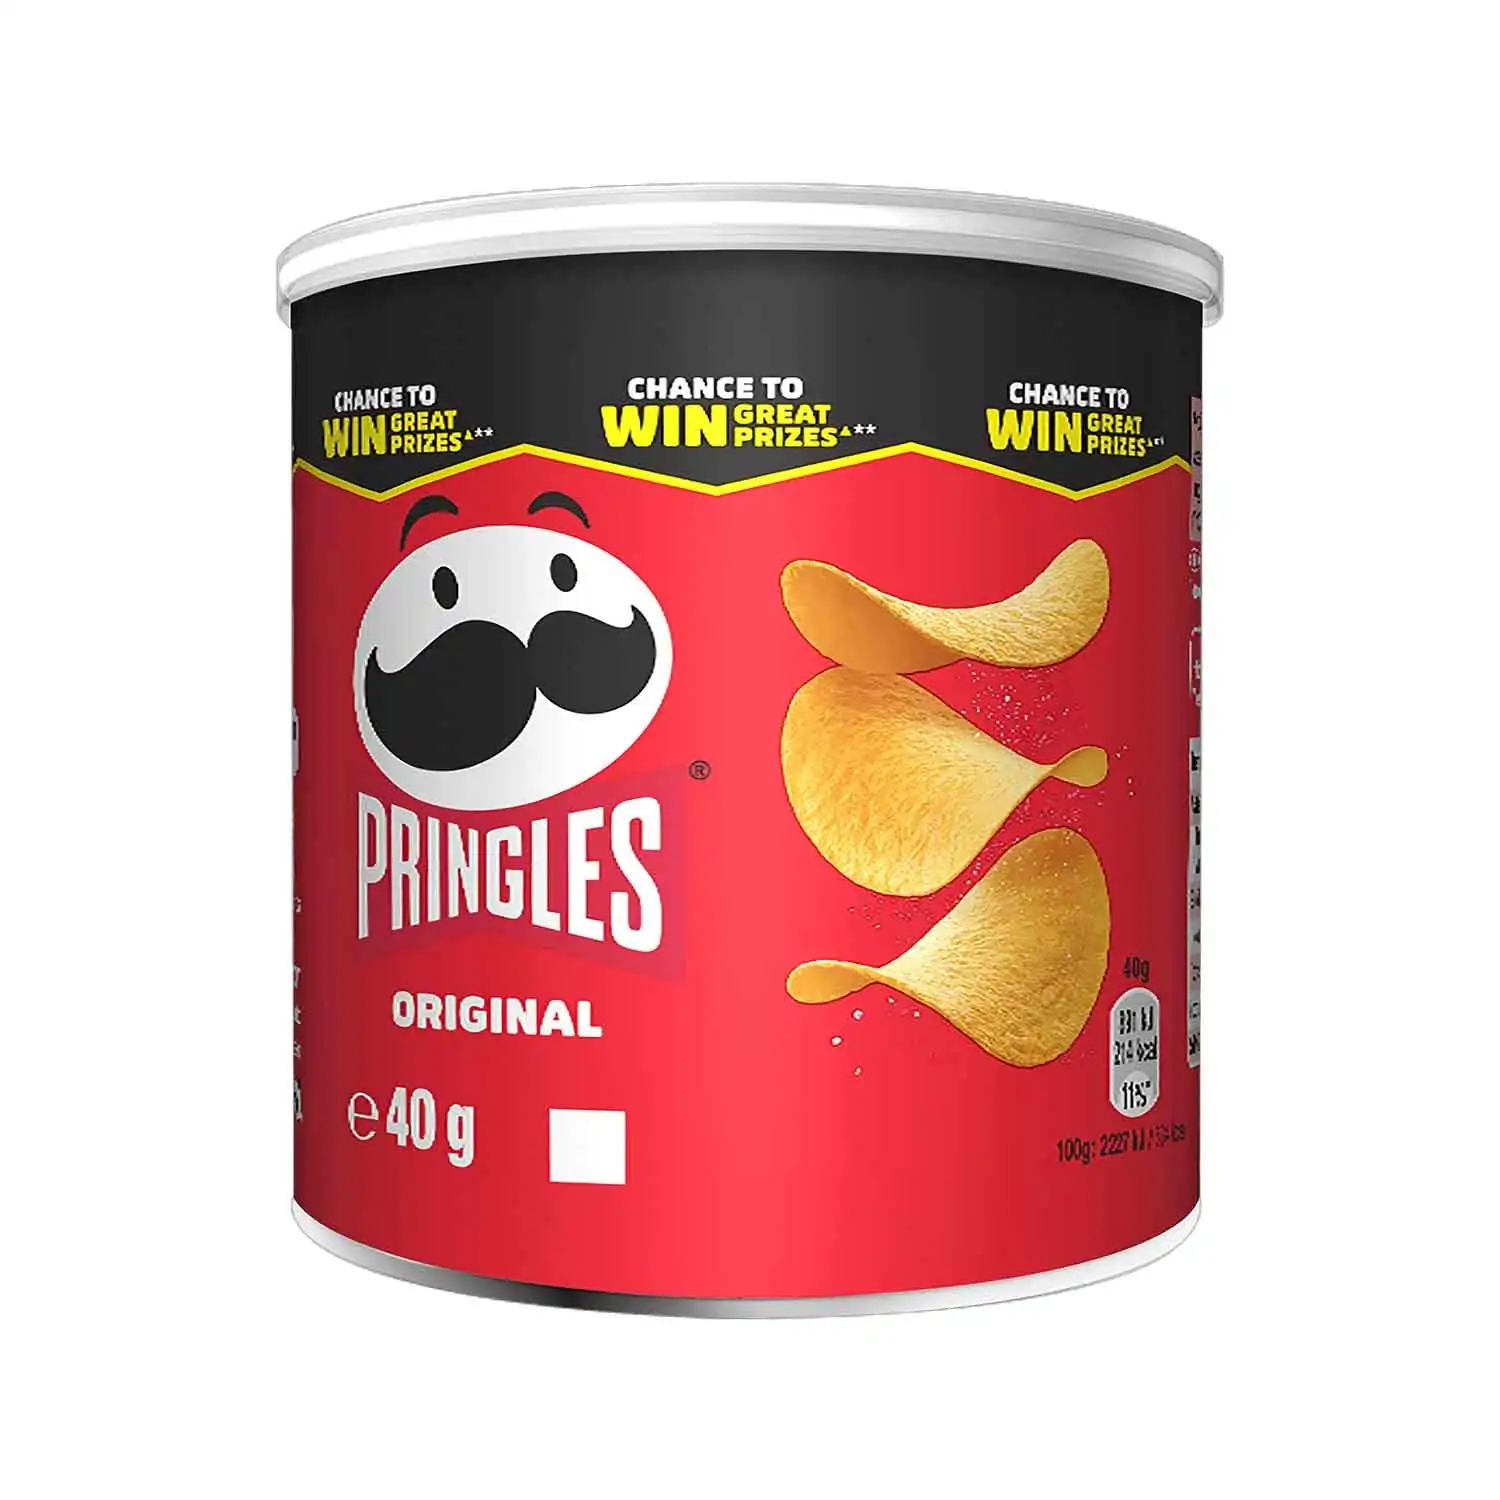 Pringles original 40g - Buy at Real Tobacco